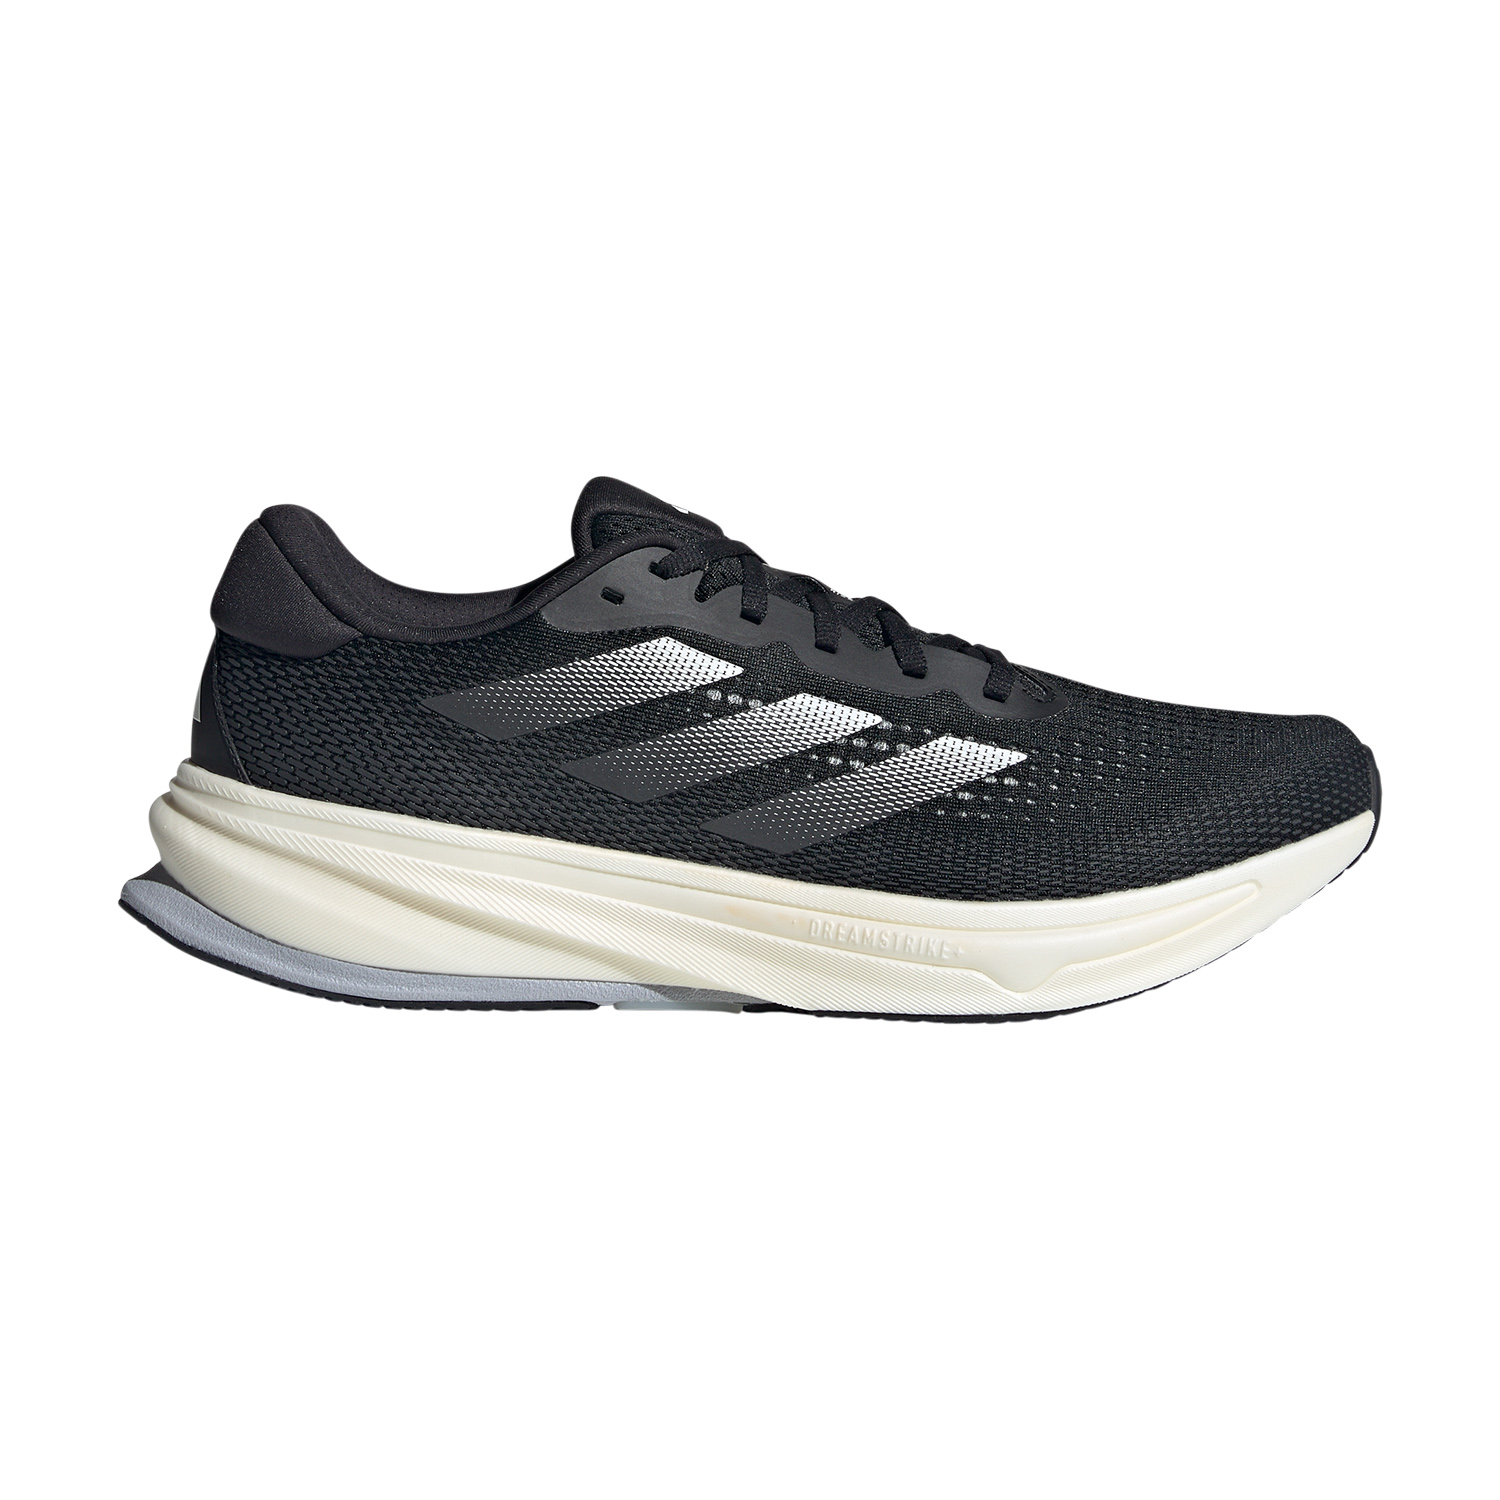 adidas Supernova Rise Men's Running Shoes - Core Black/Grey Five